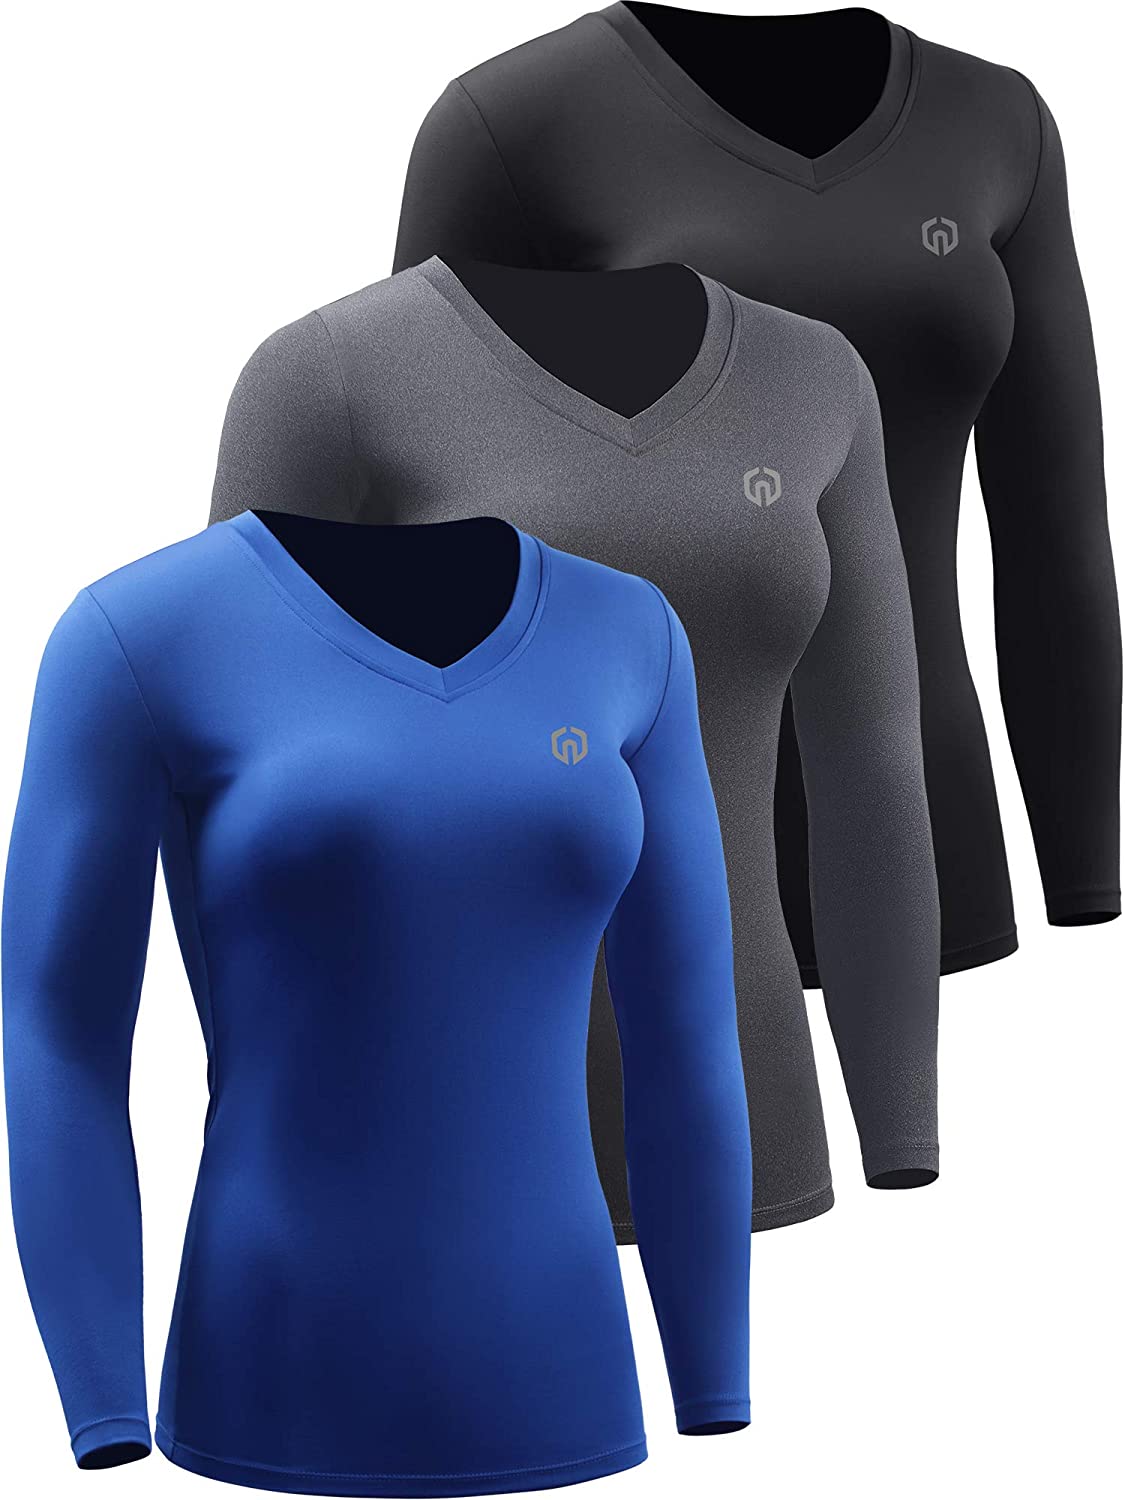 NELEUS Women's 3 Pack Compression Shirts Long Sleeve Yoga Athletic